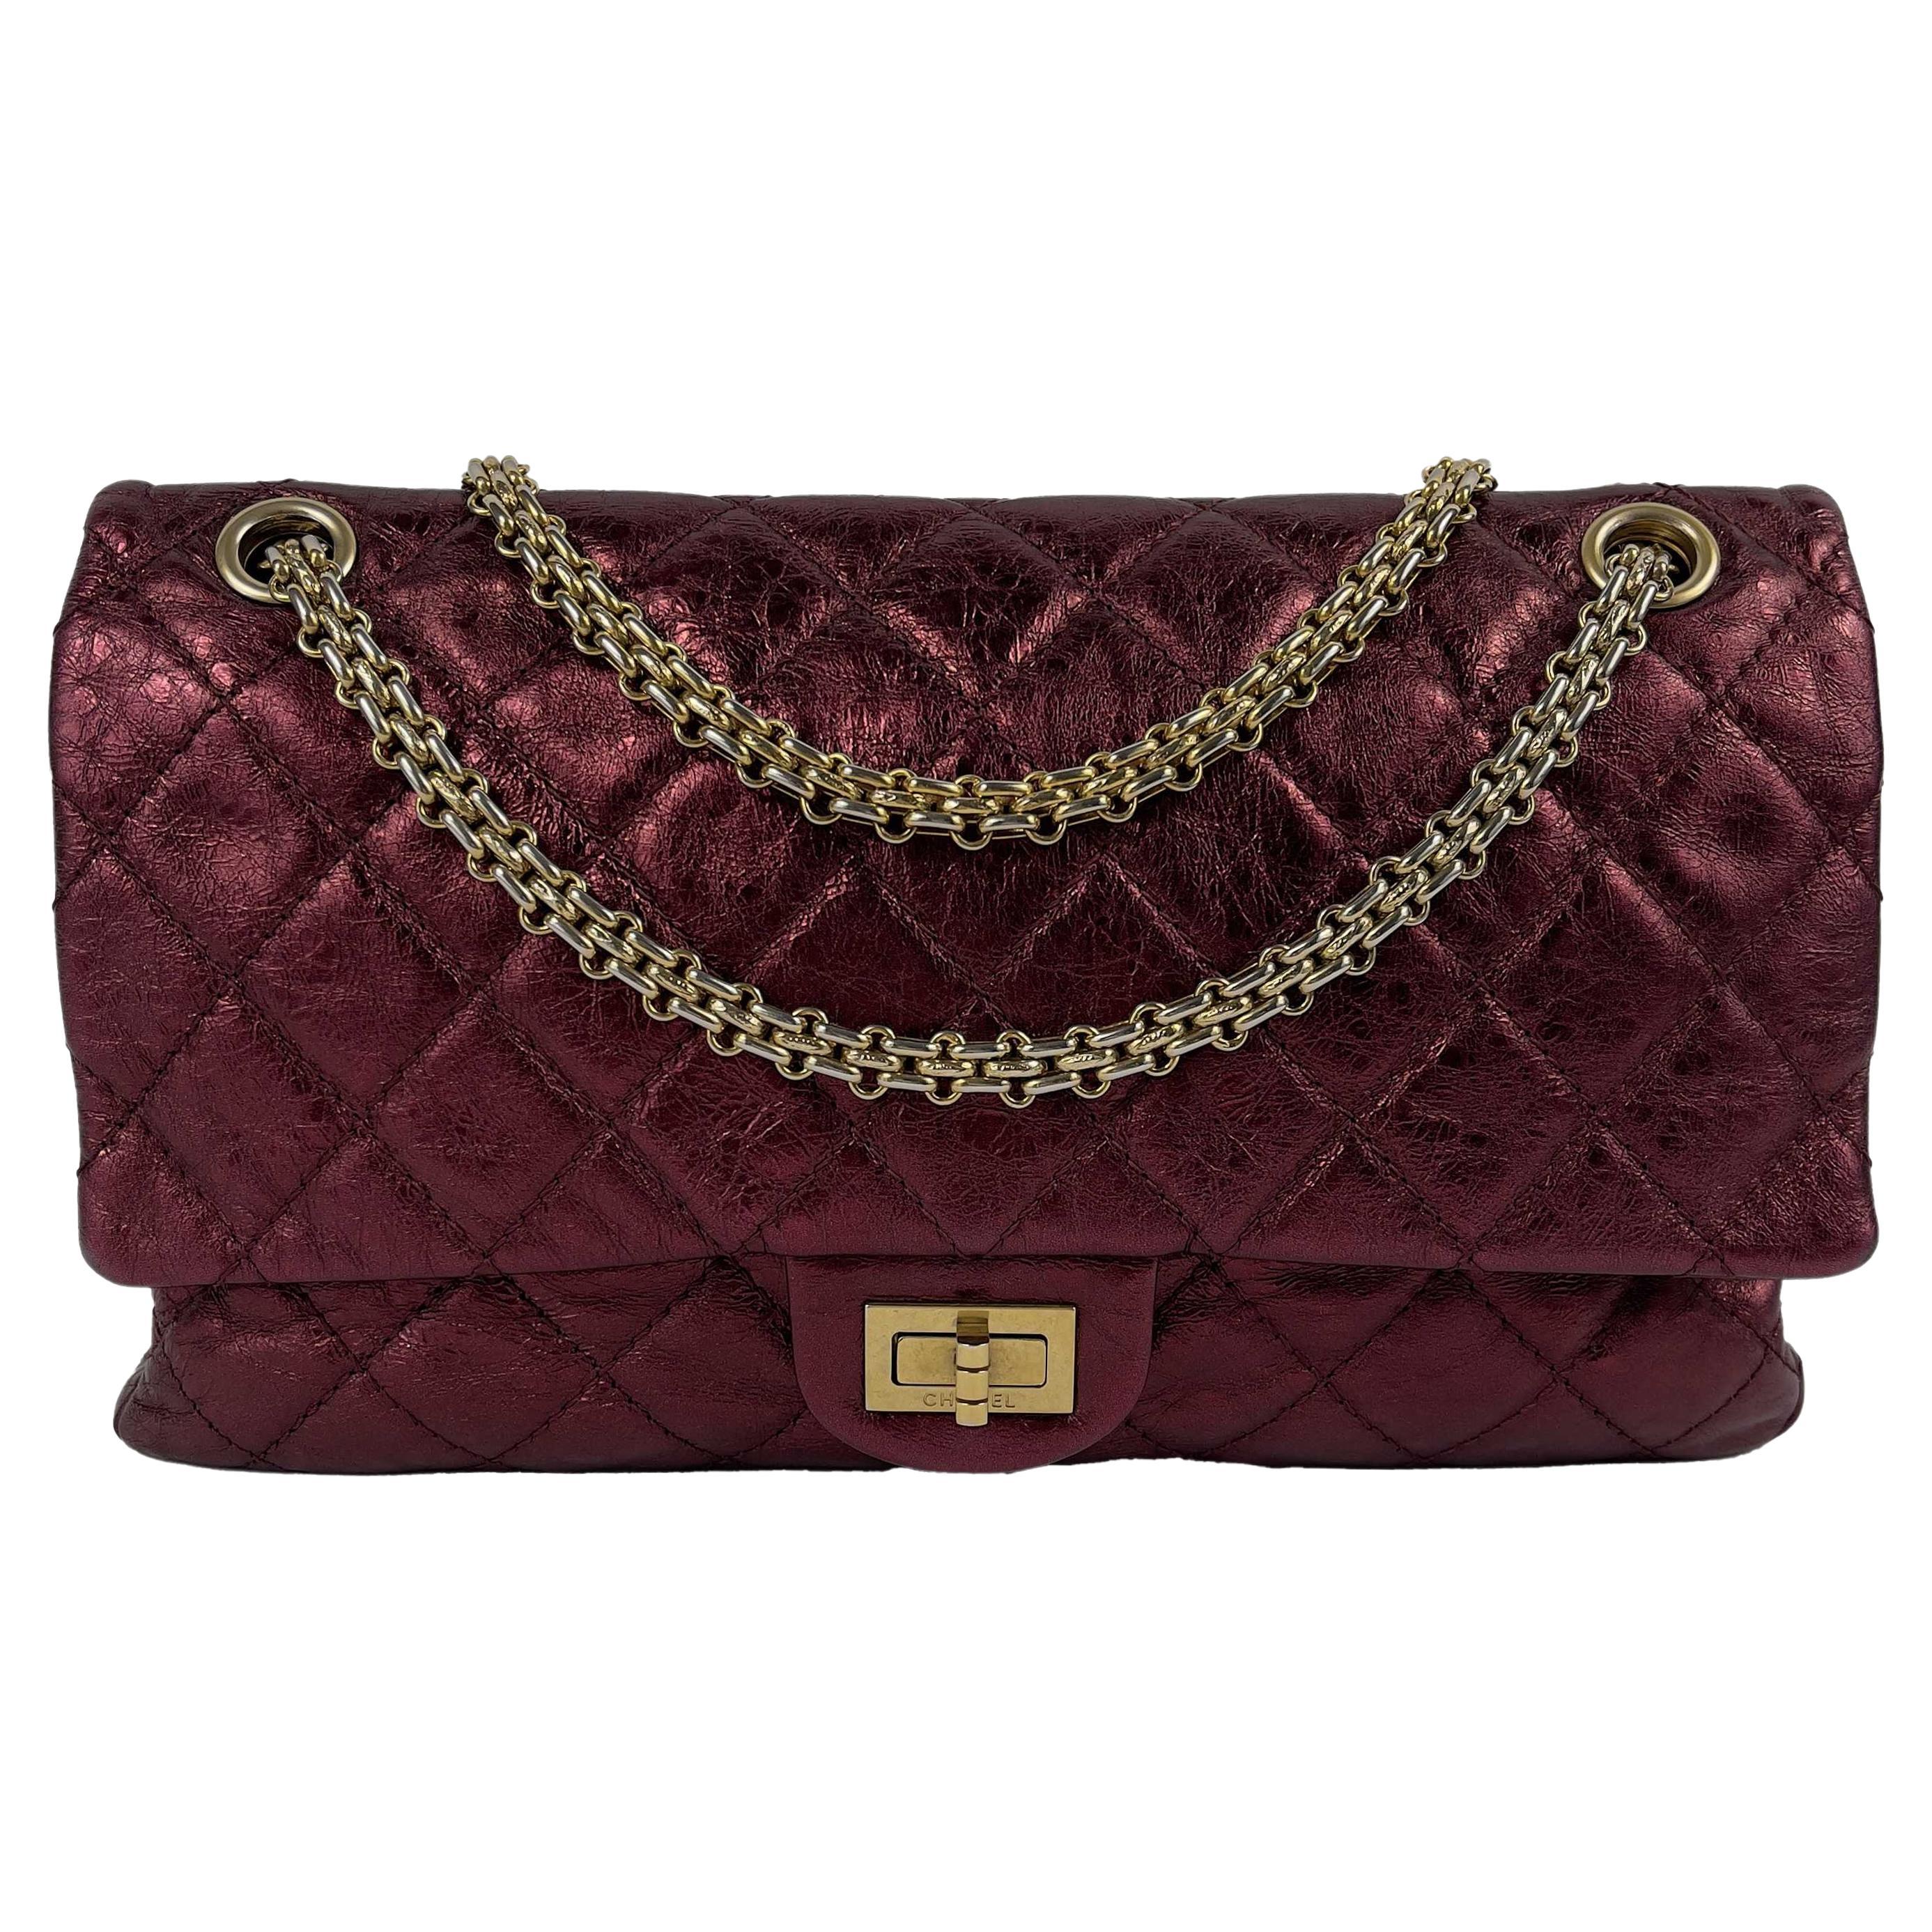 Maroon Chanel Bag - 12 For Sale on 1stDibs